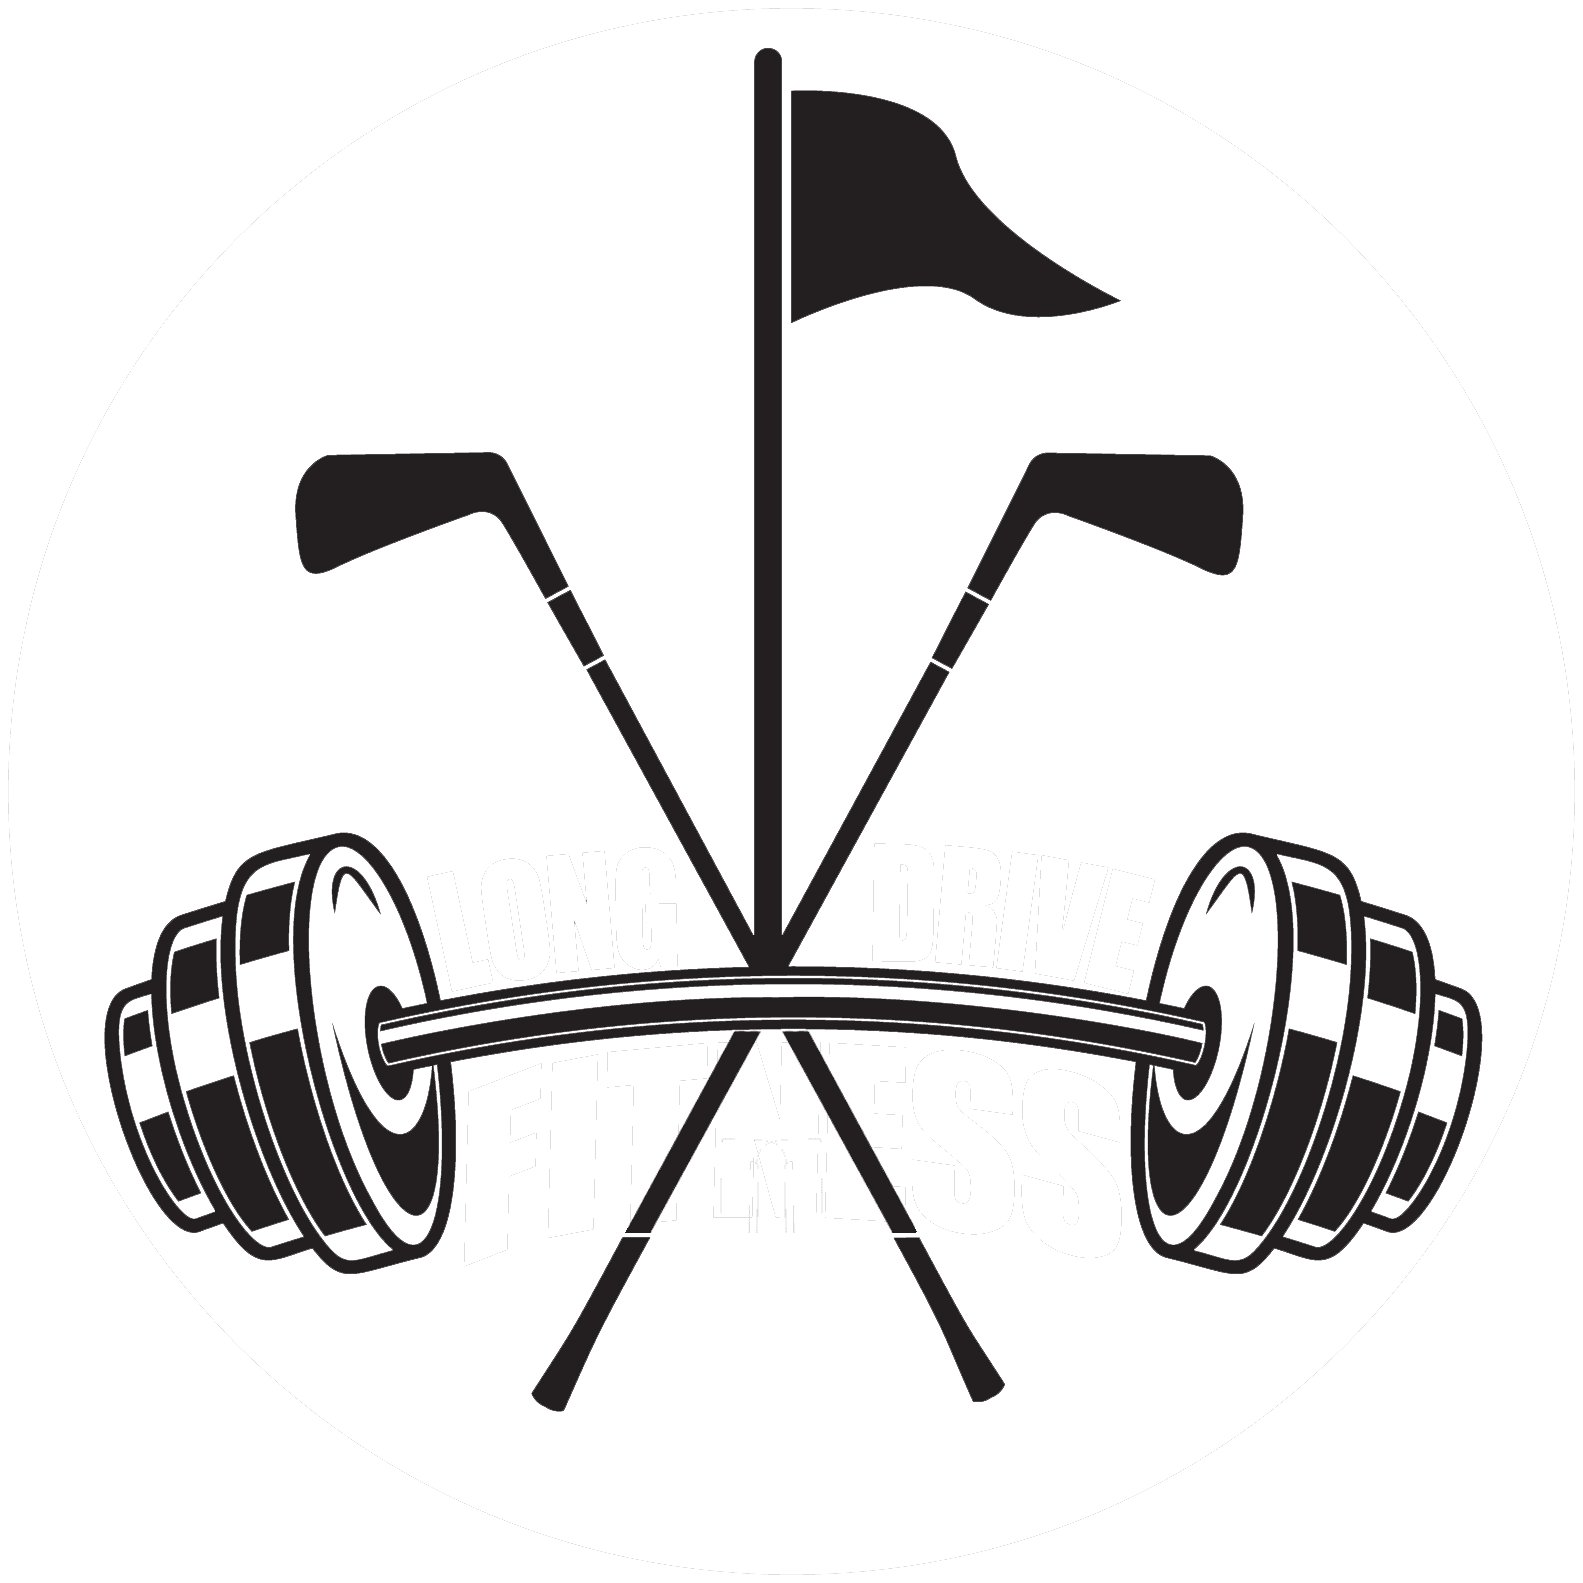 <h1>Golf Fitness<br />Assessment</h1>